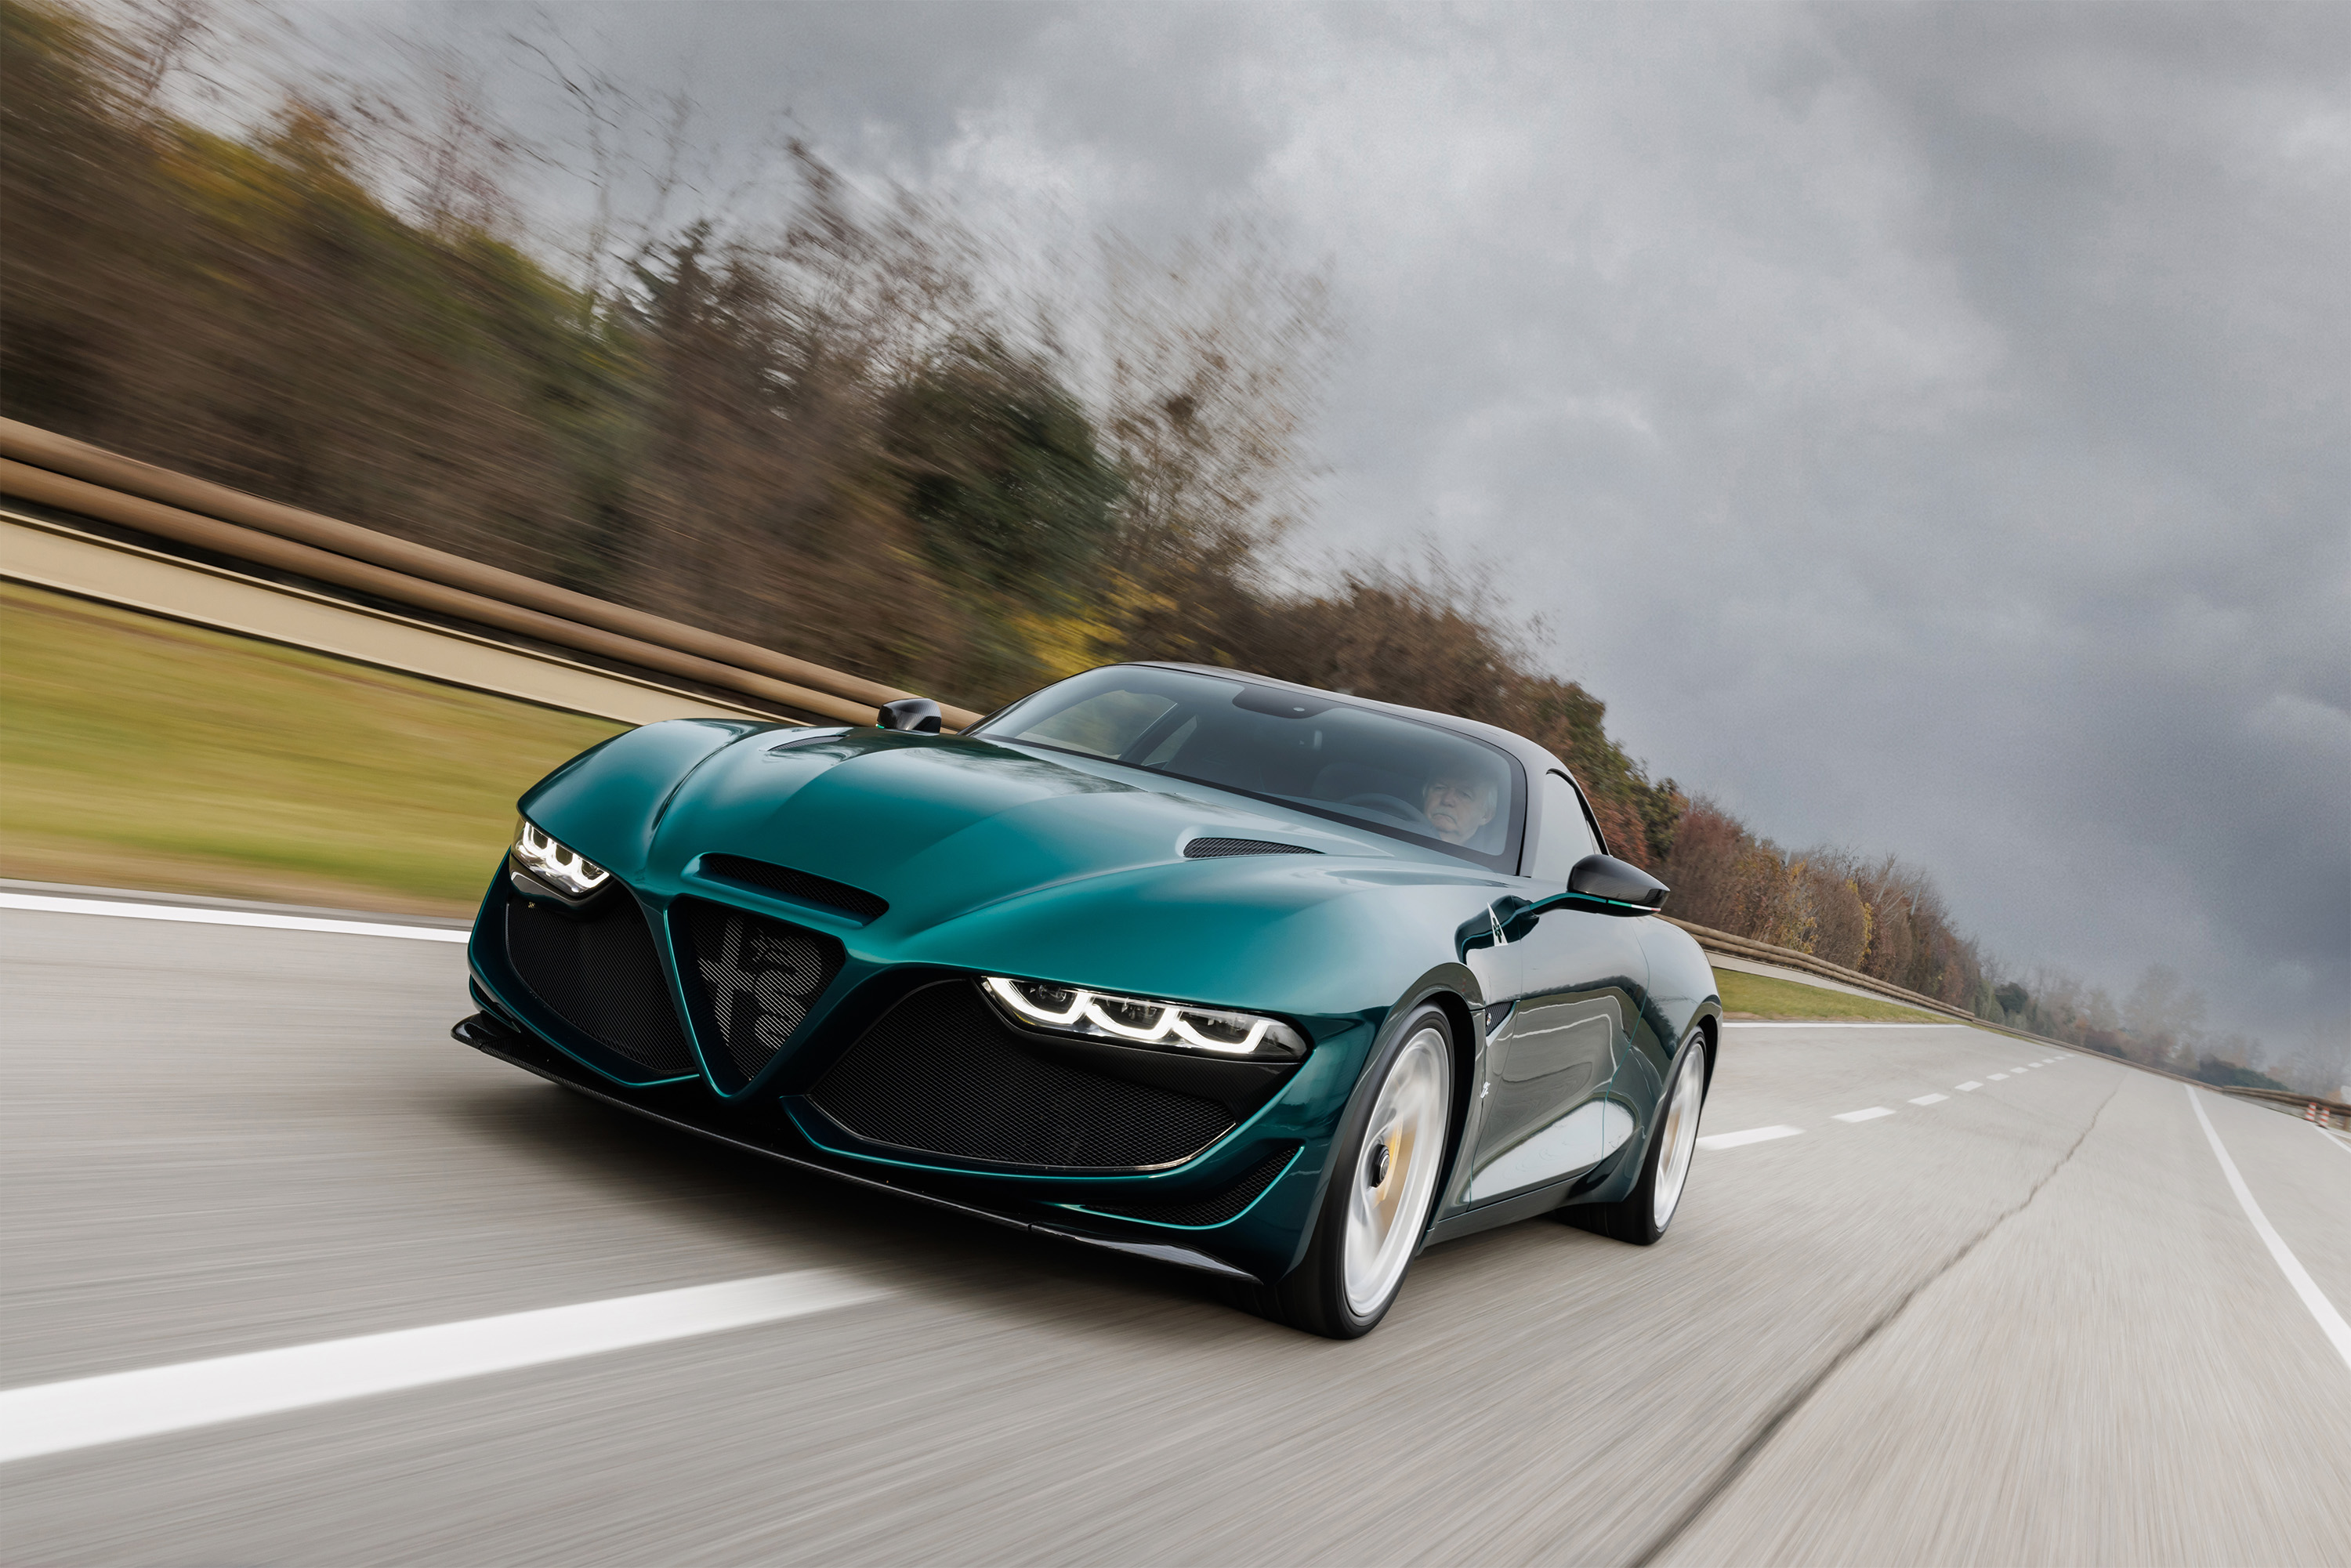 Alfa Romeo Giulia SWB Zagato revealed as a glorious green oneoff coupe